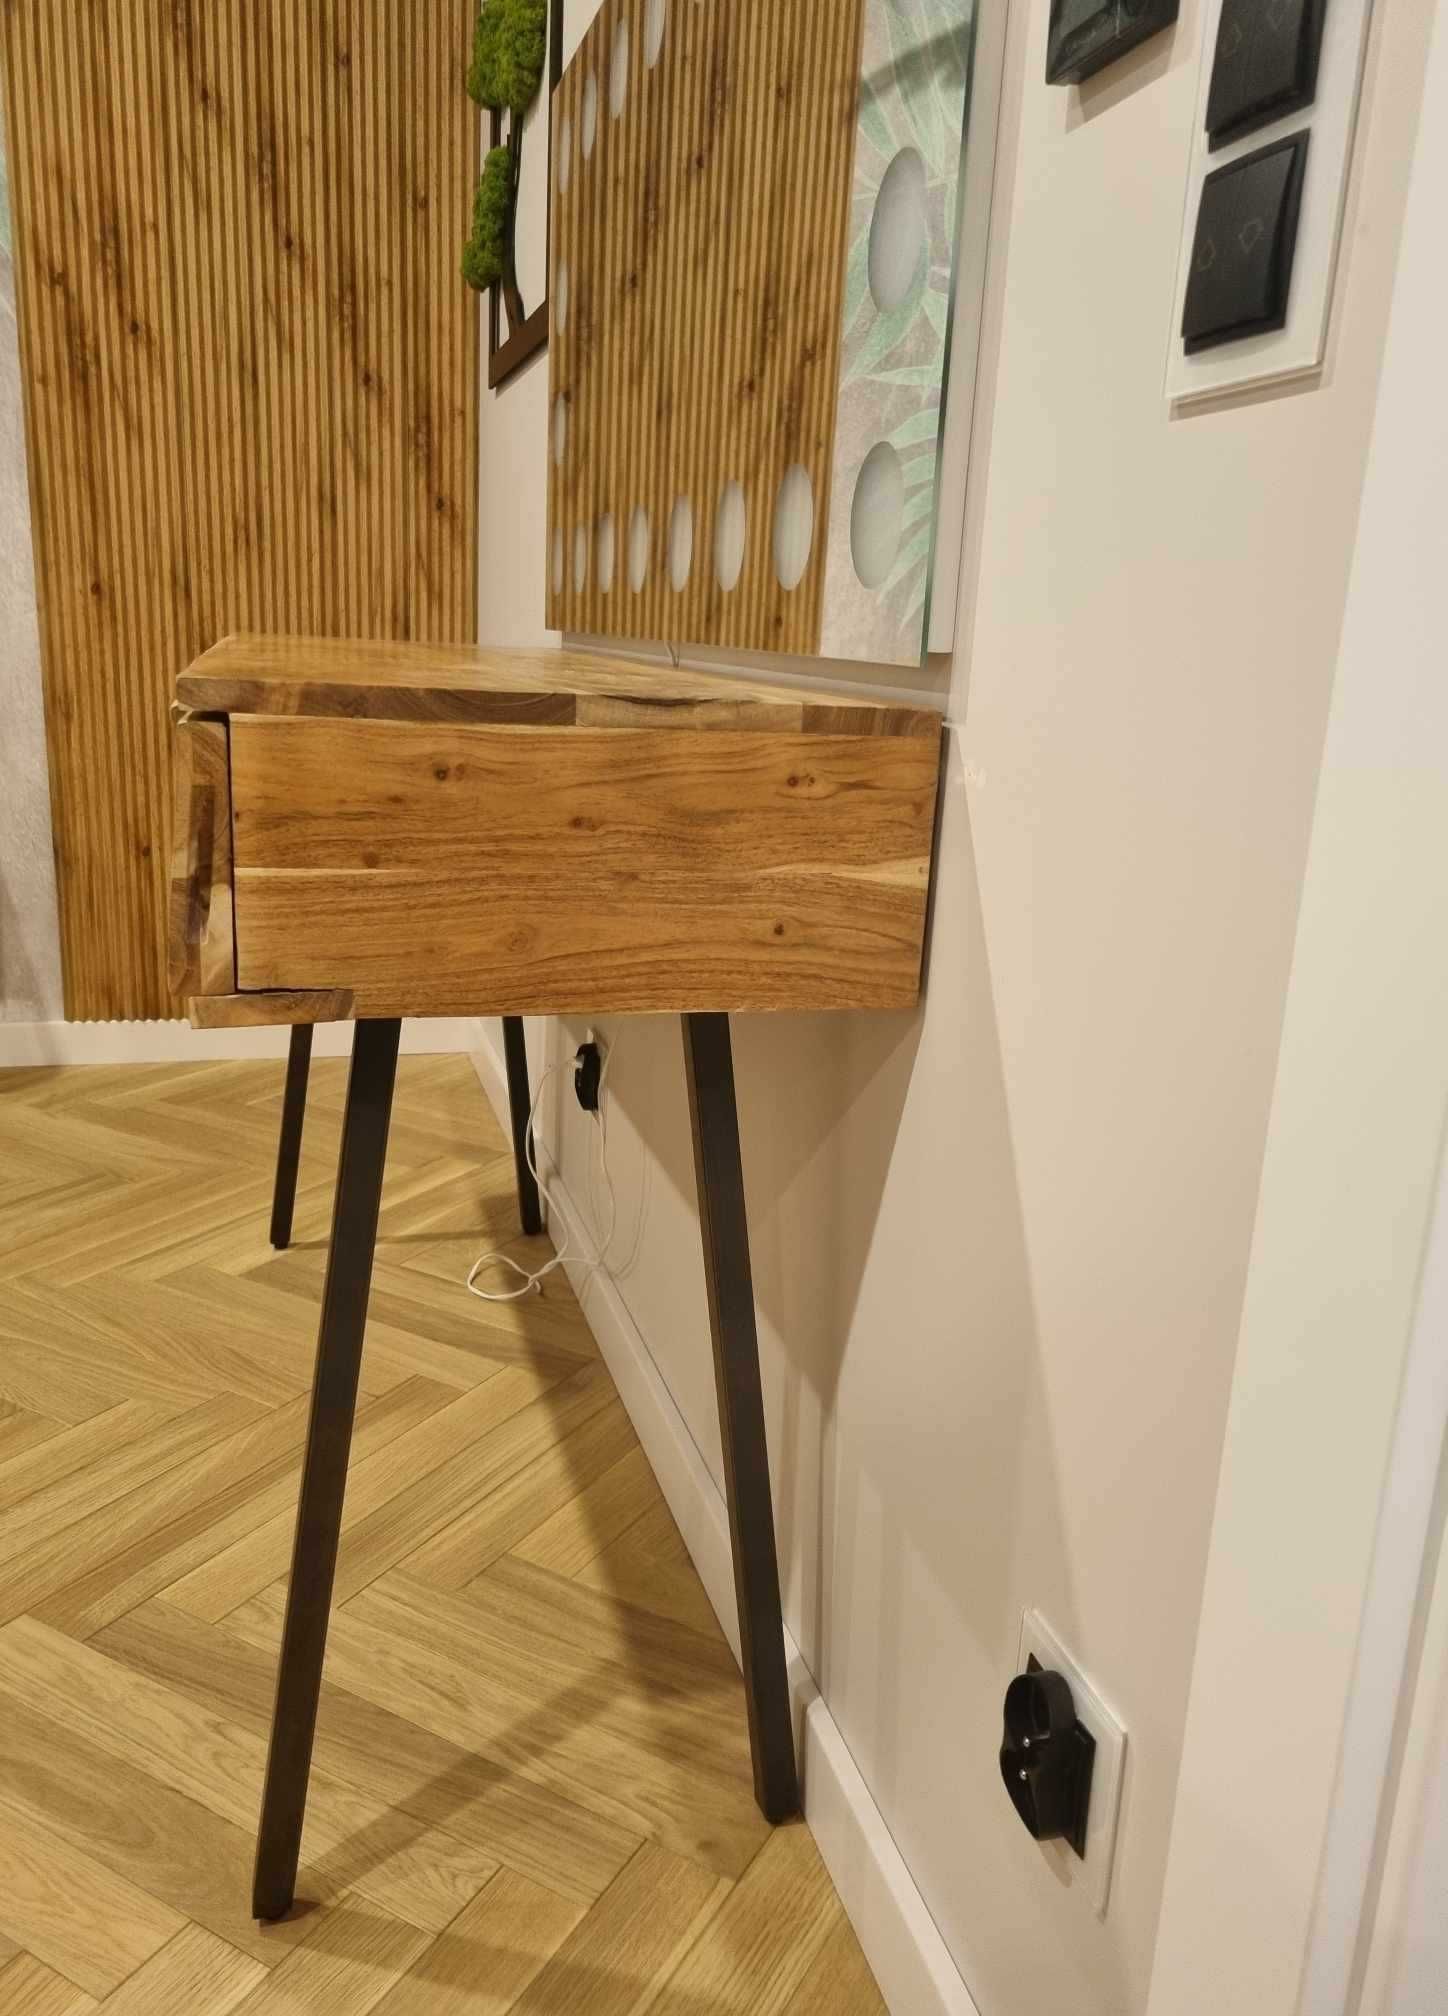 Toaletka, konsola, biurko Demn naturalne drewno